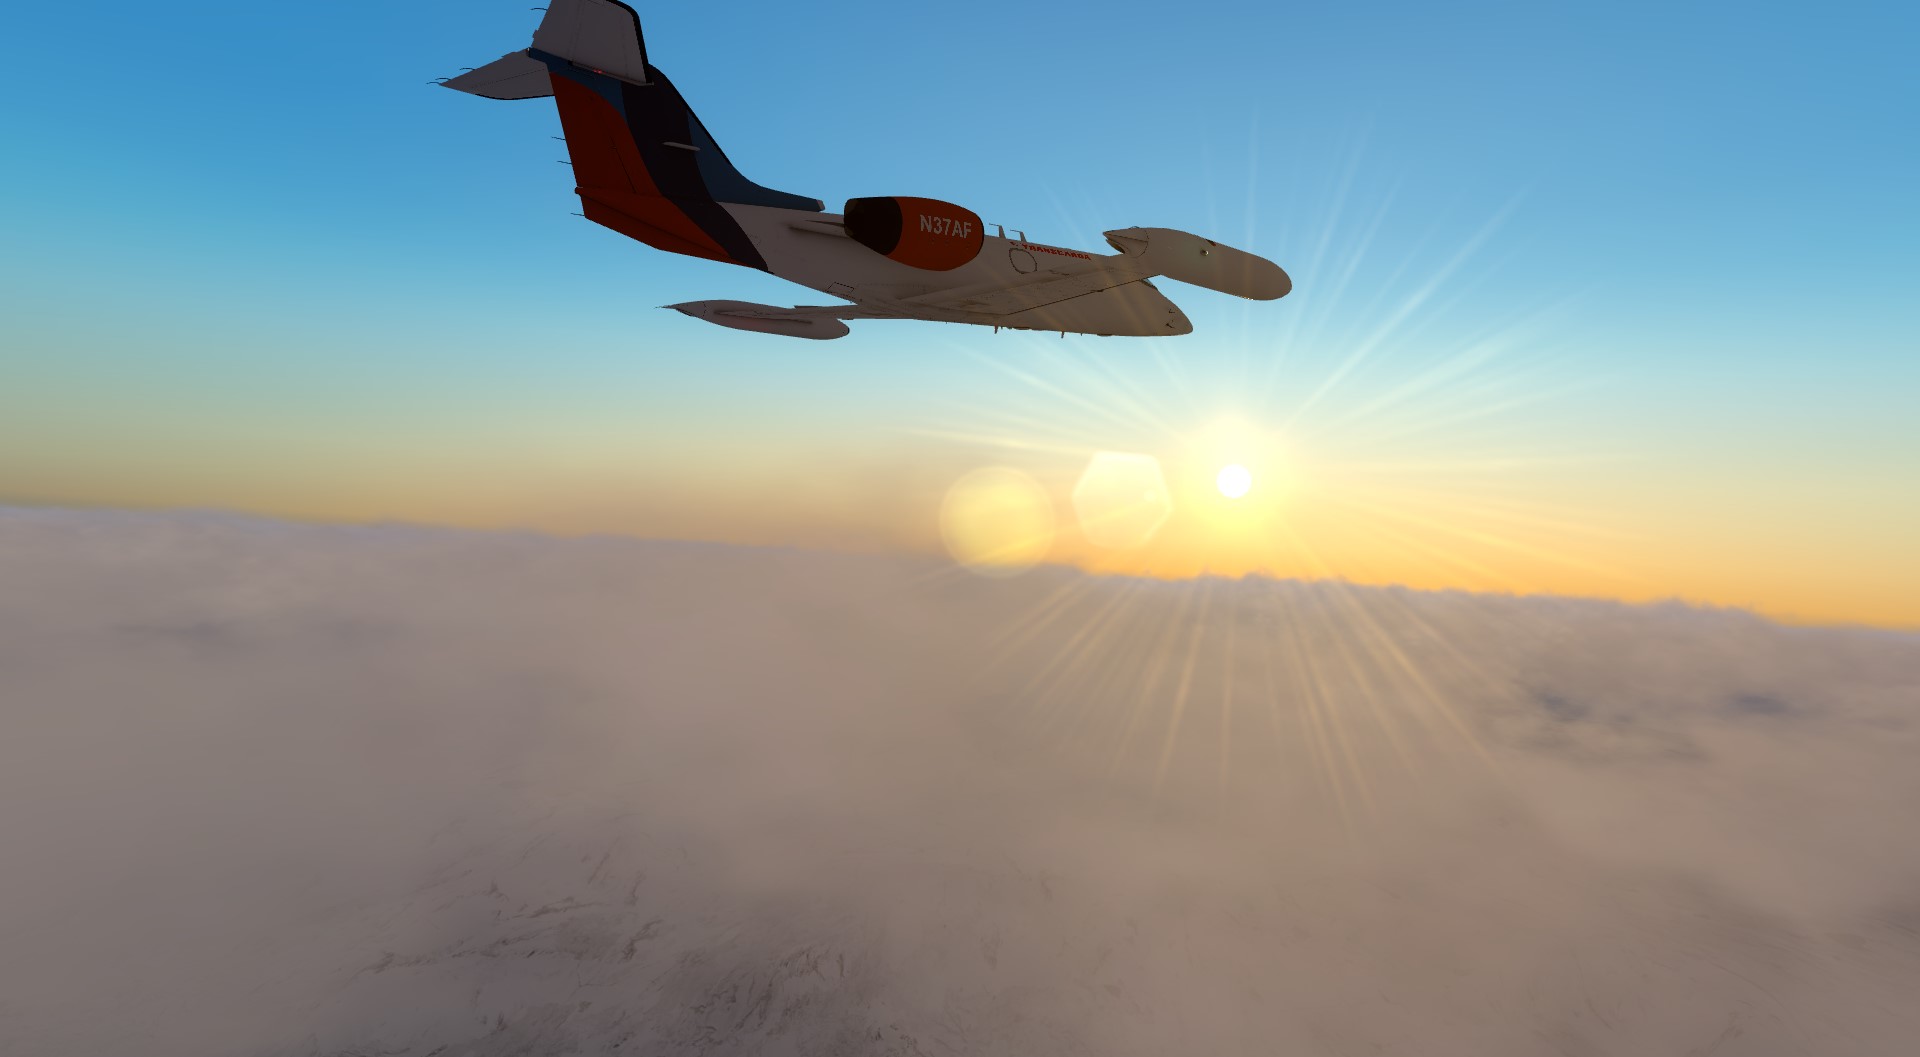 Flysimware – Learjet 35A 评测与冰岛送货之旅-9122 